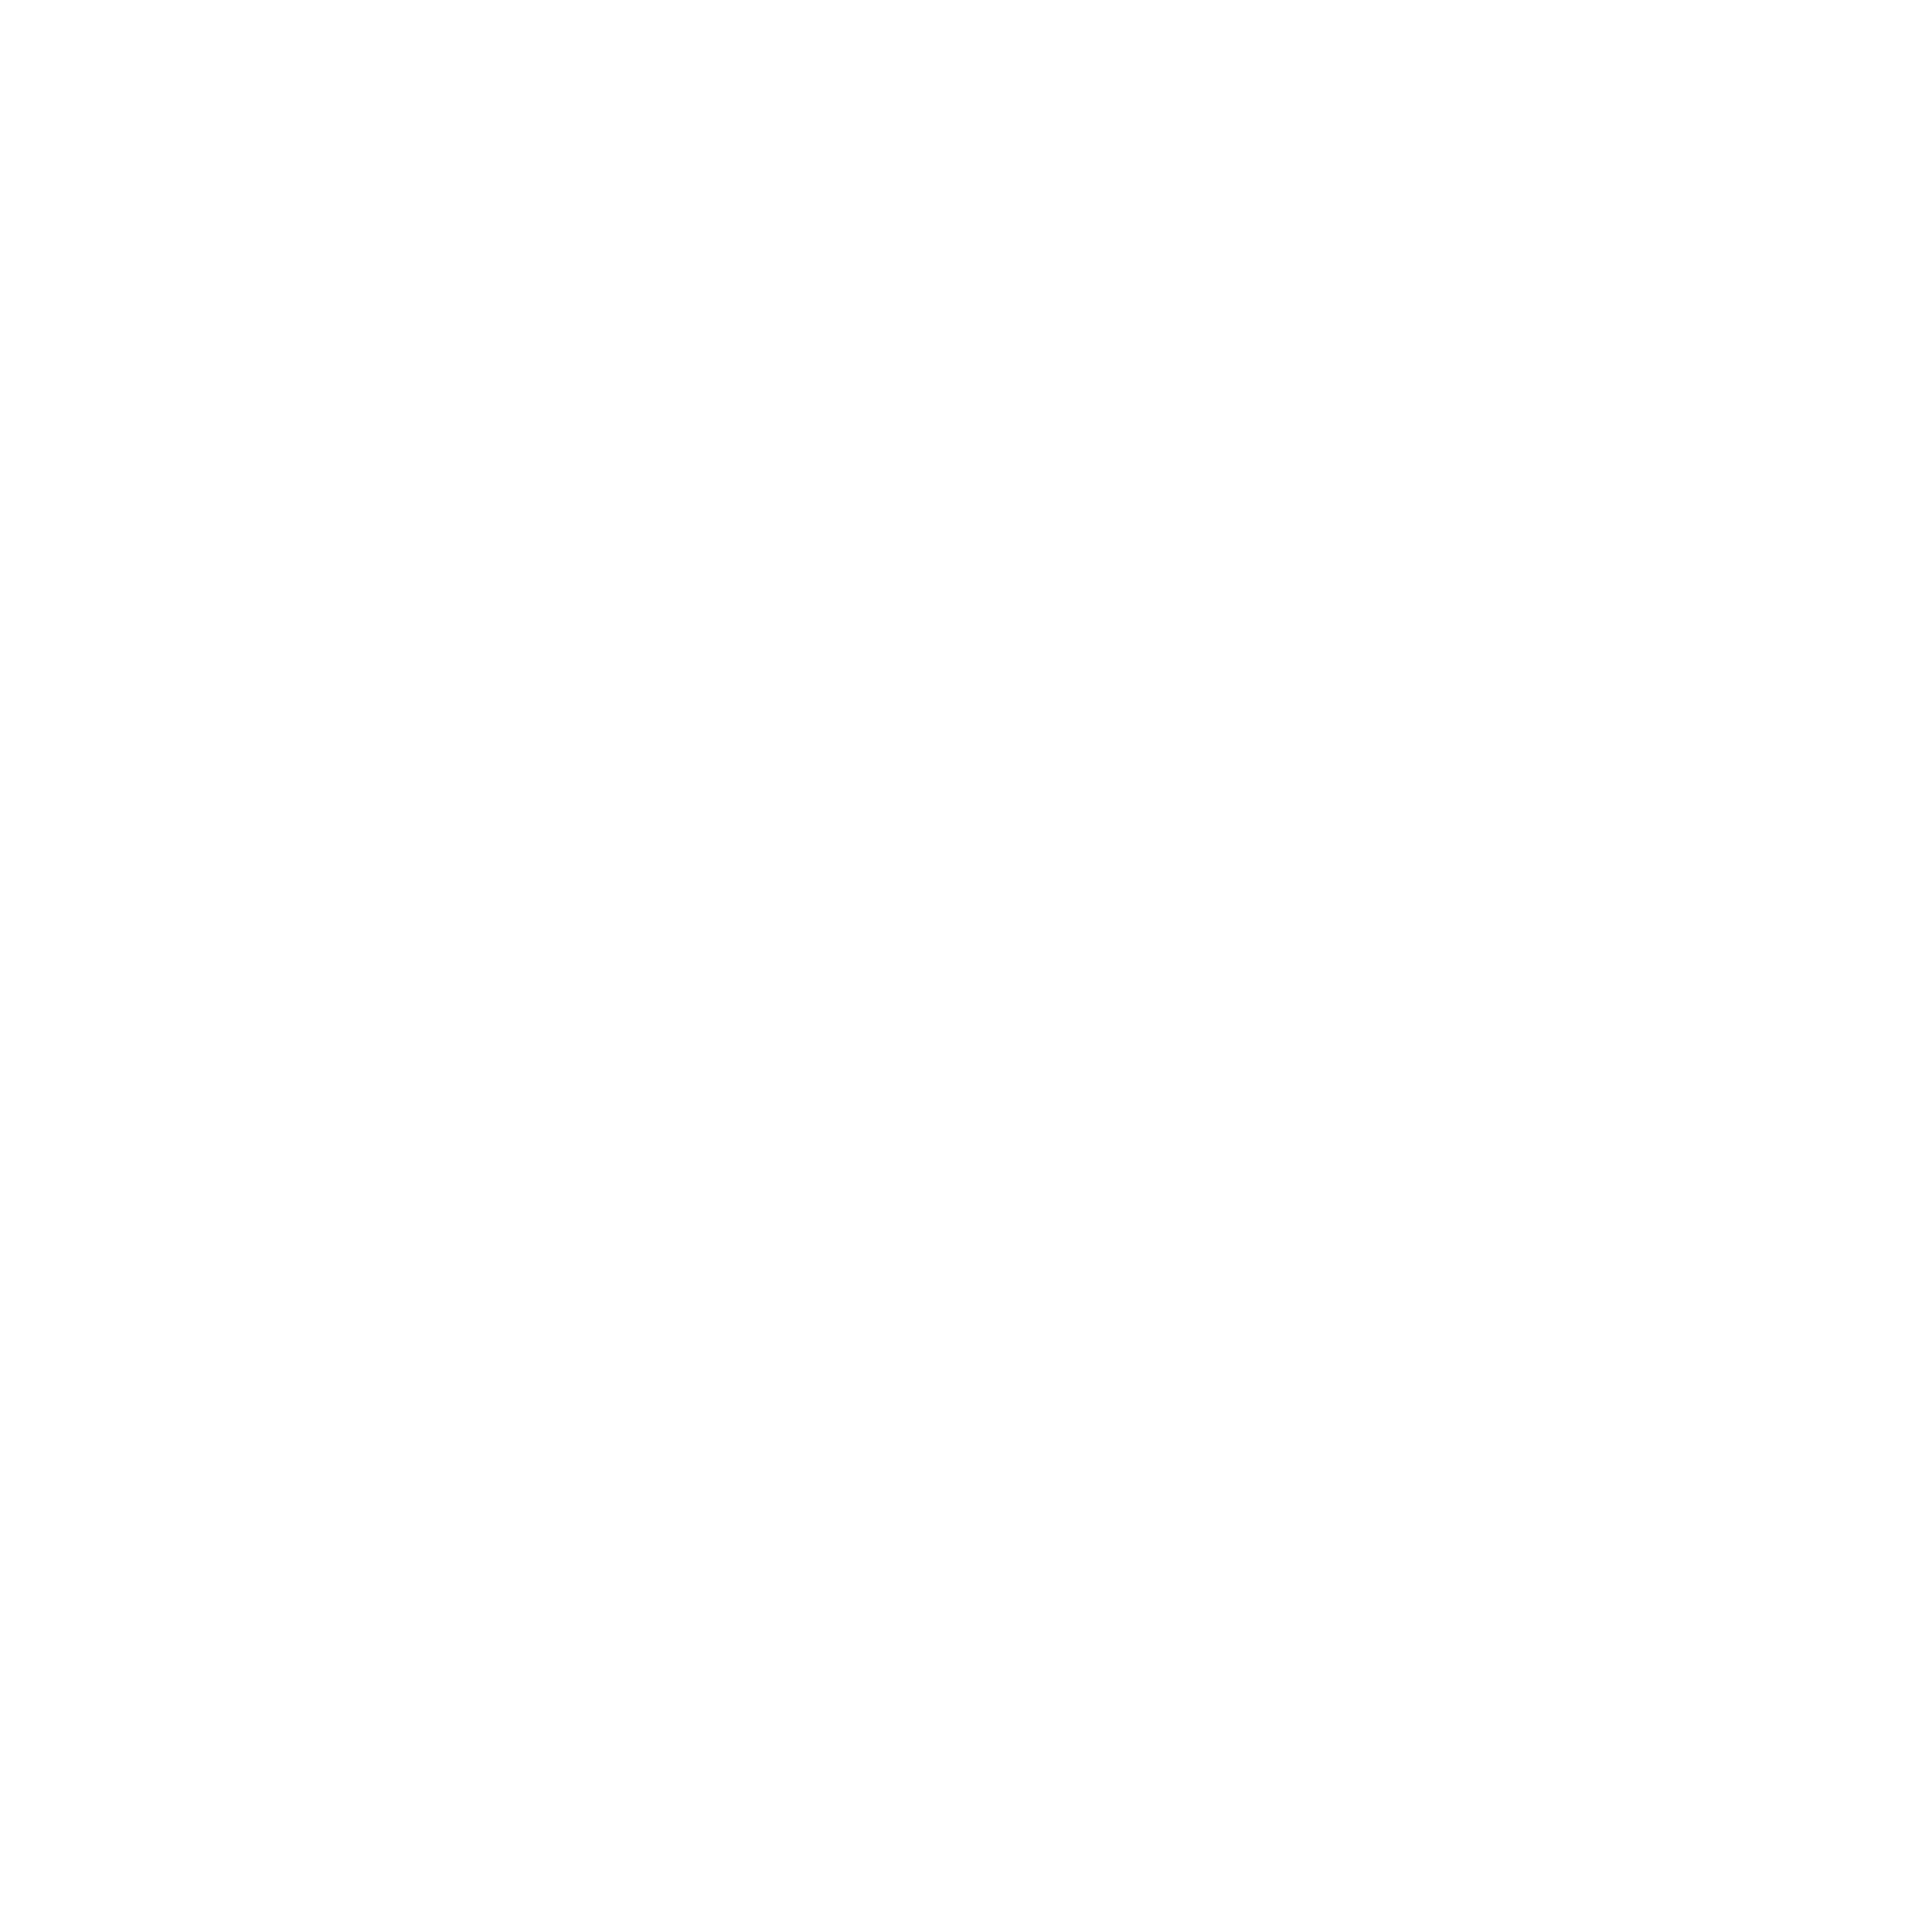 Zebra Golf Logo - Zebra by RAM Golf Logo PNG Transparent & SVG Vector